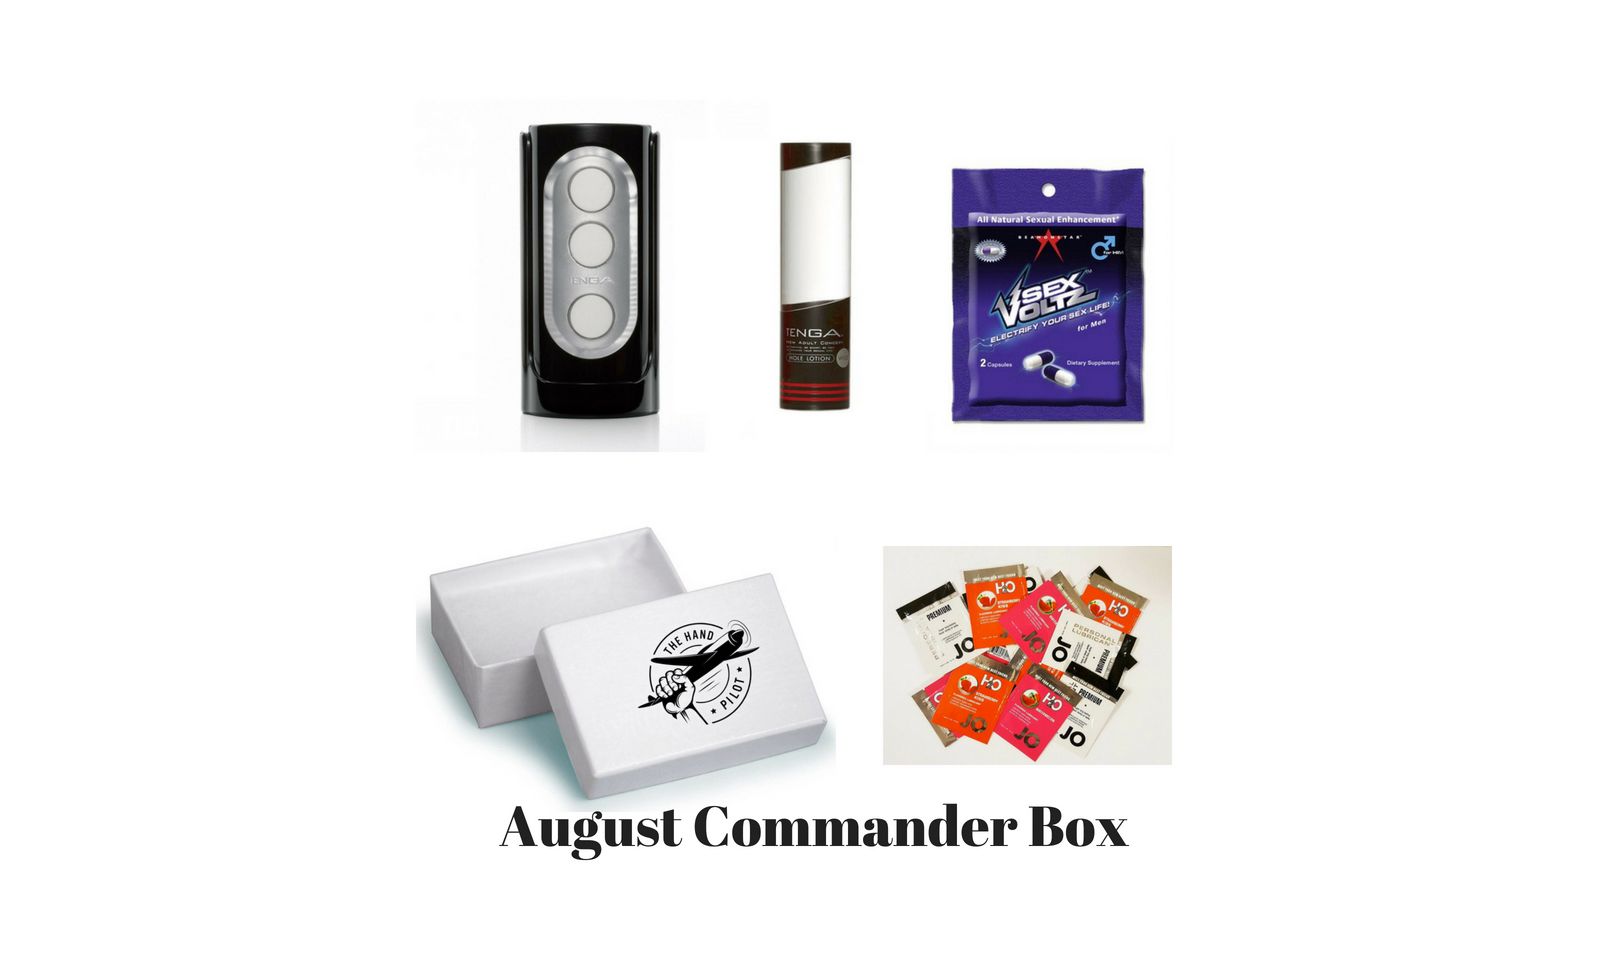 Hand Pilot’s August Commander Box Features Tenga, More